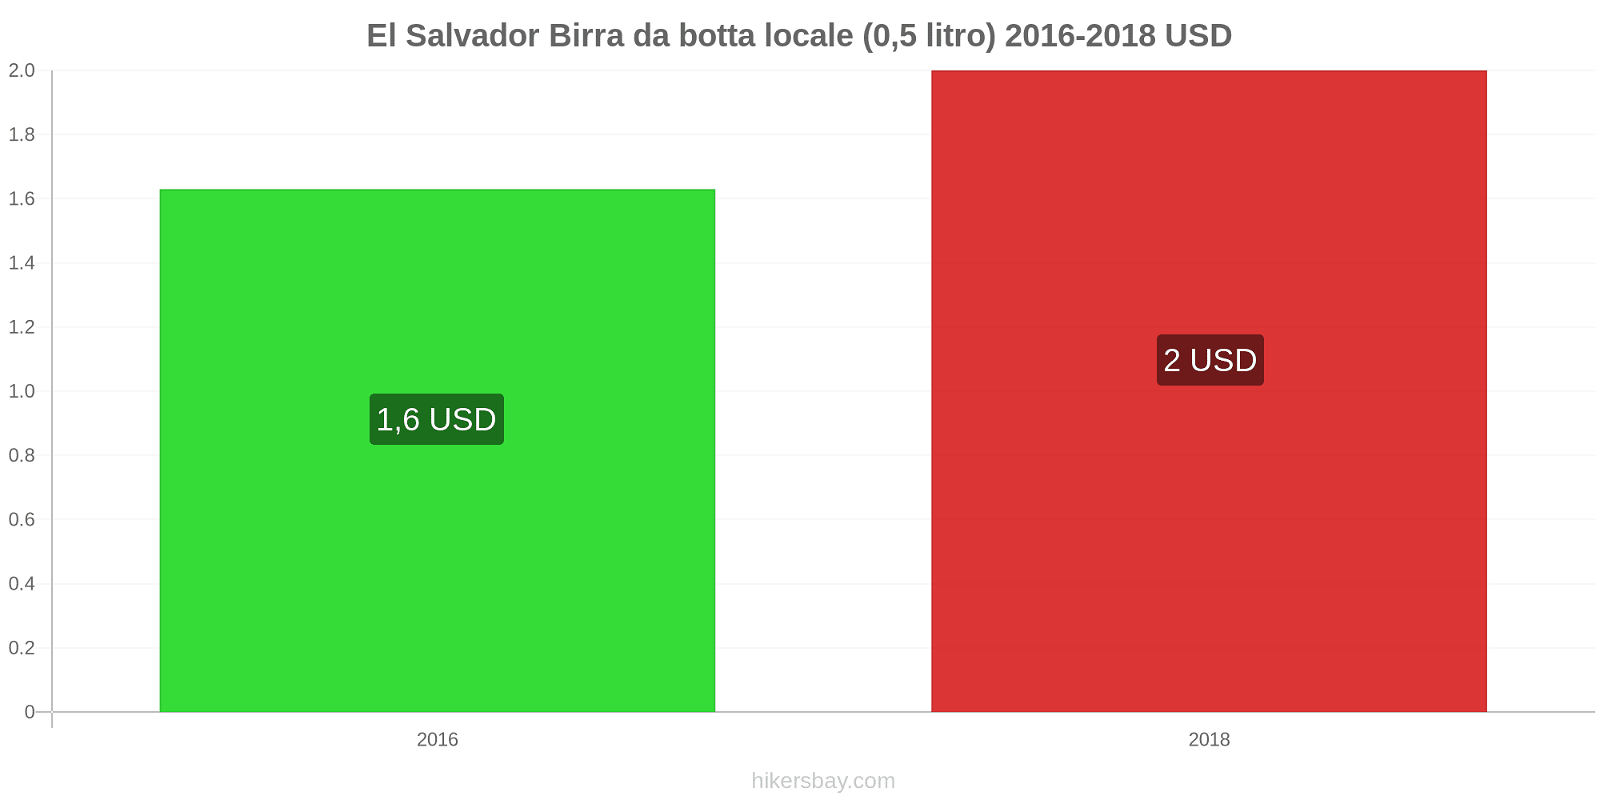 El Salvador cambi di prezzo Birra alla spina (0,5 litri) hikersbay.com